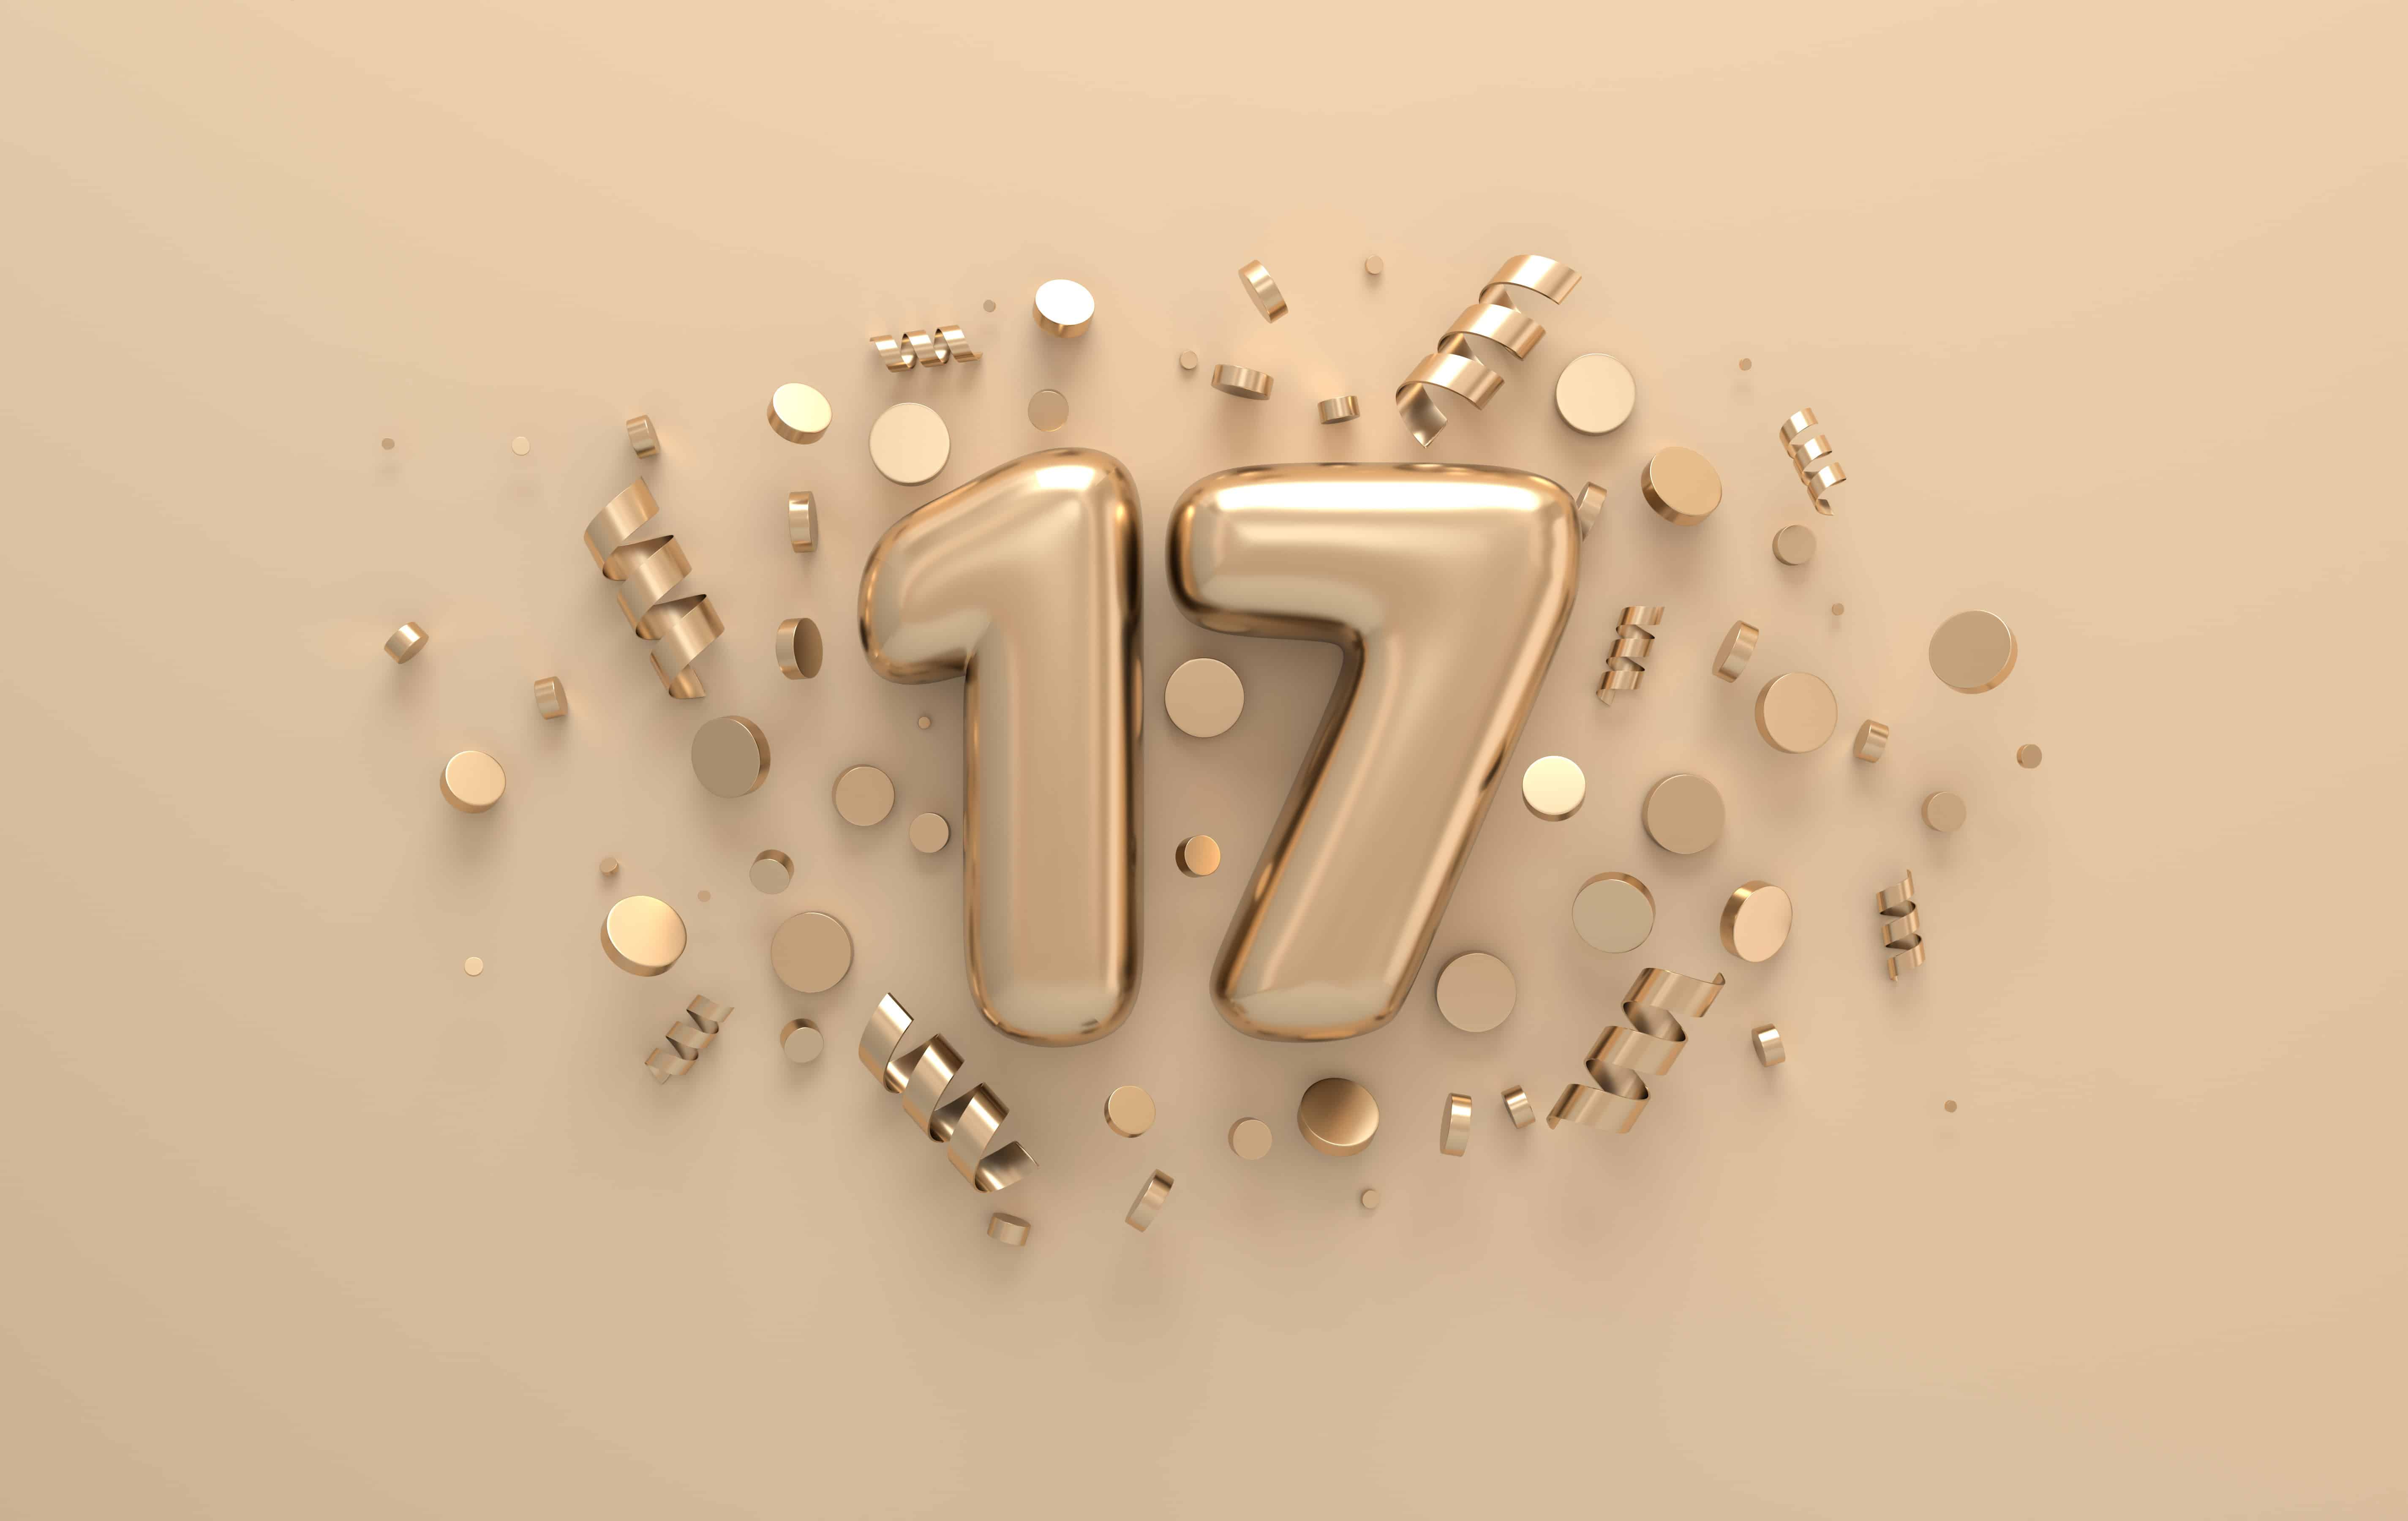 number 17